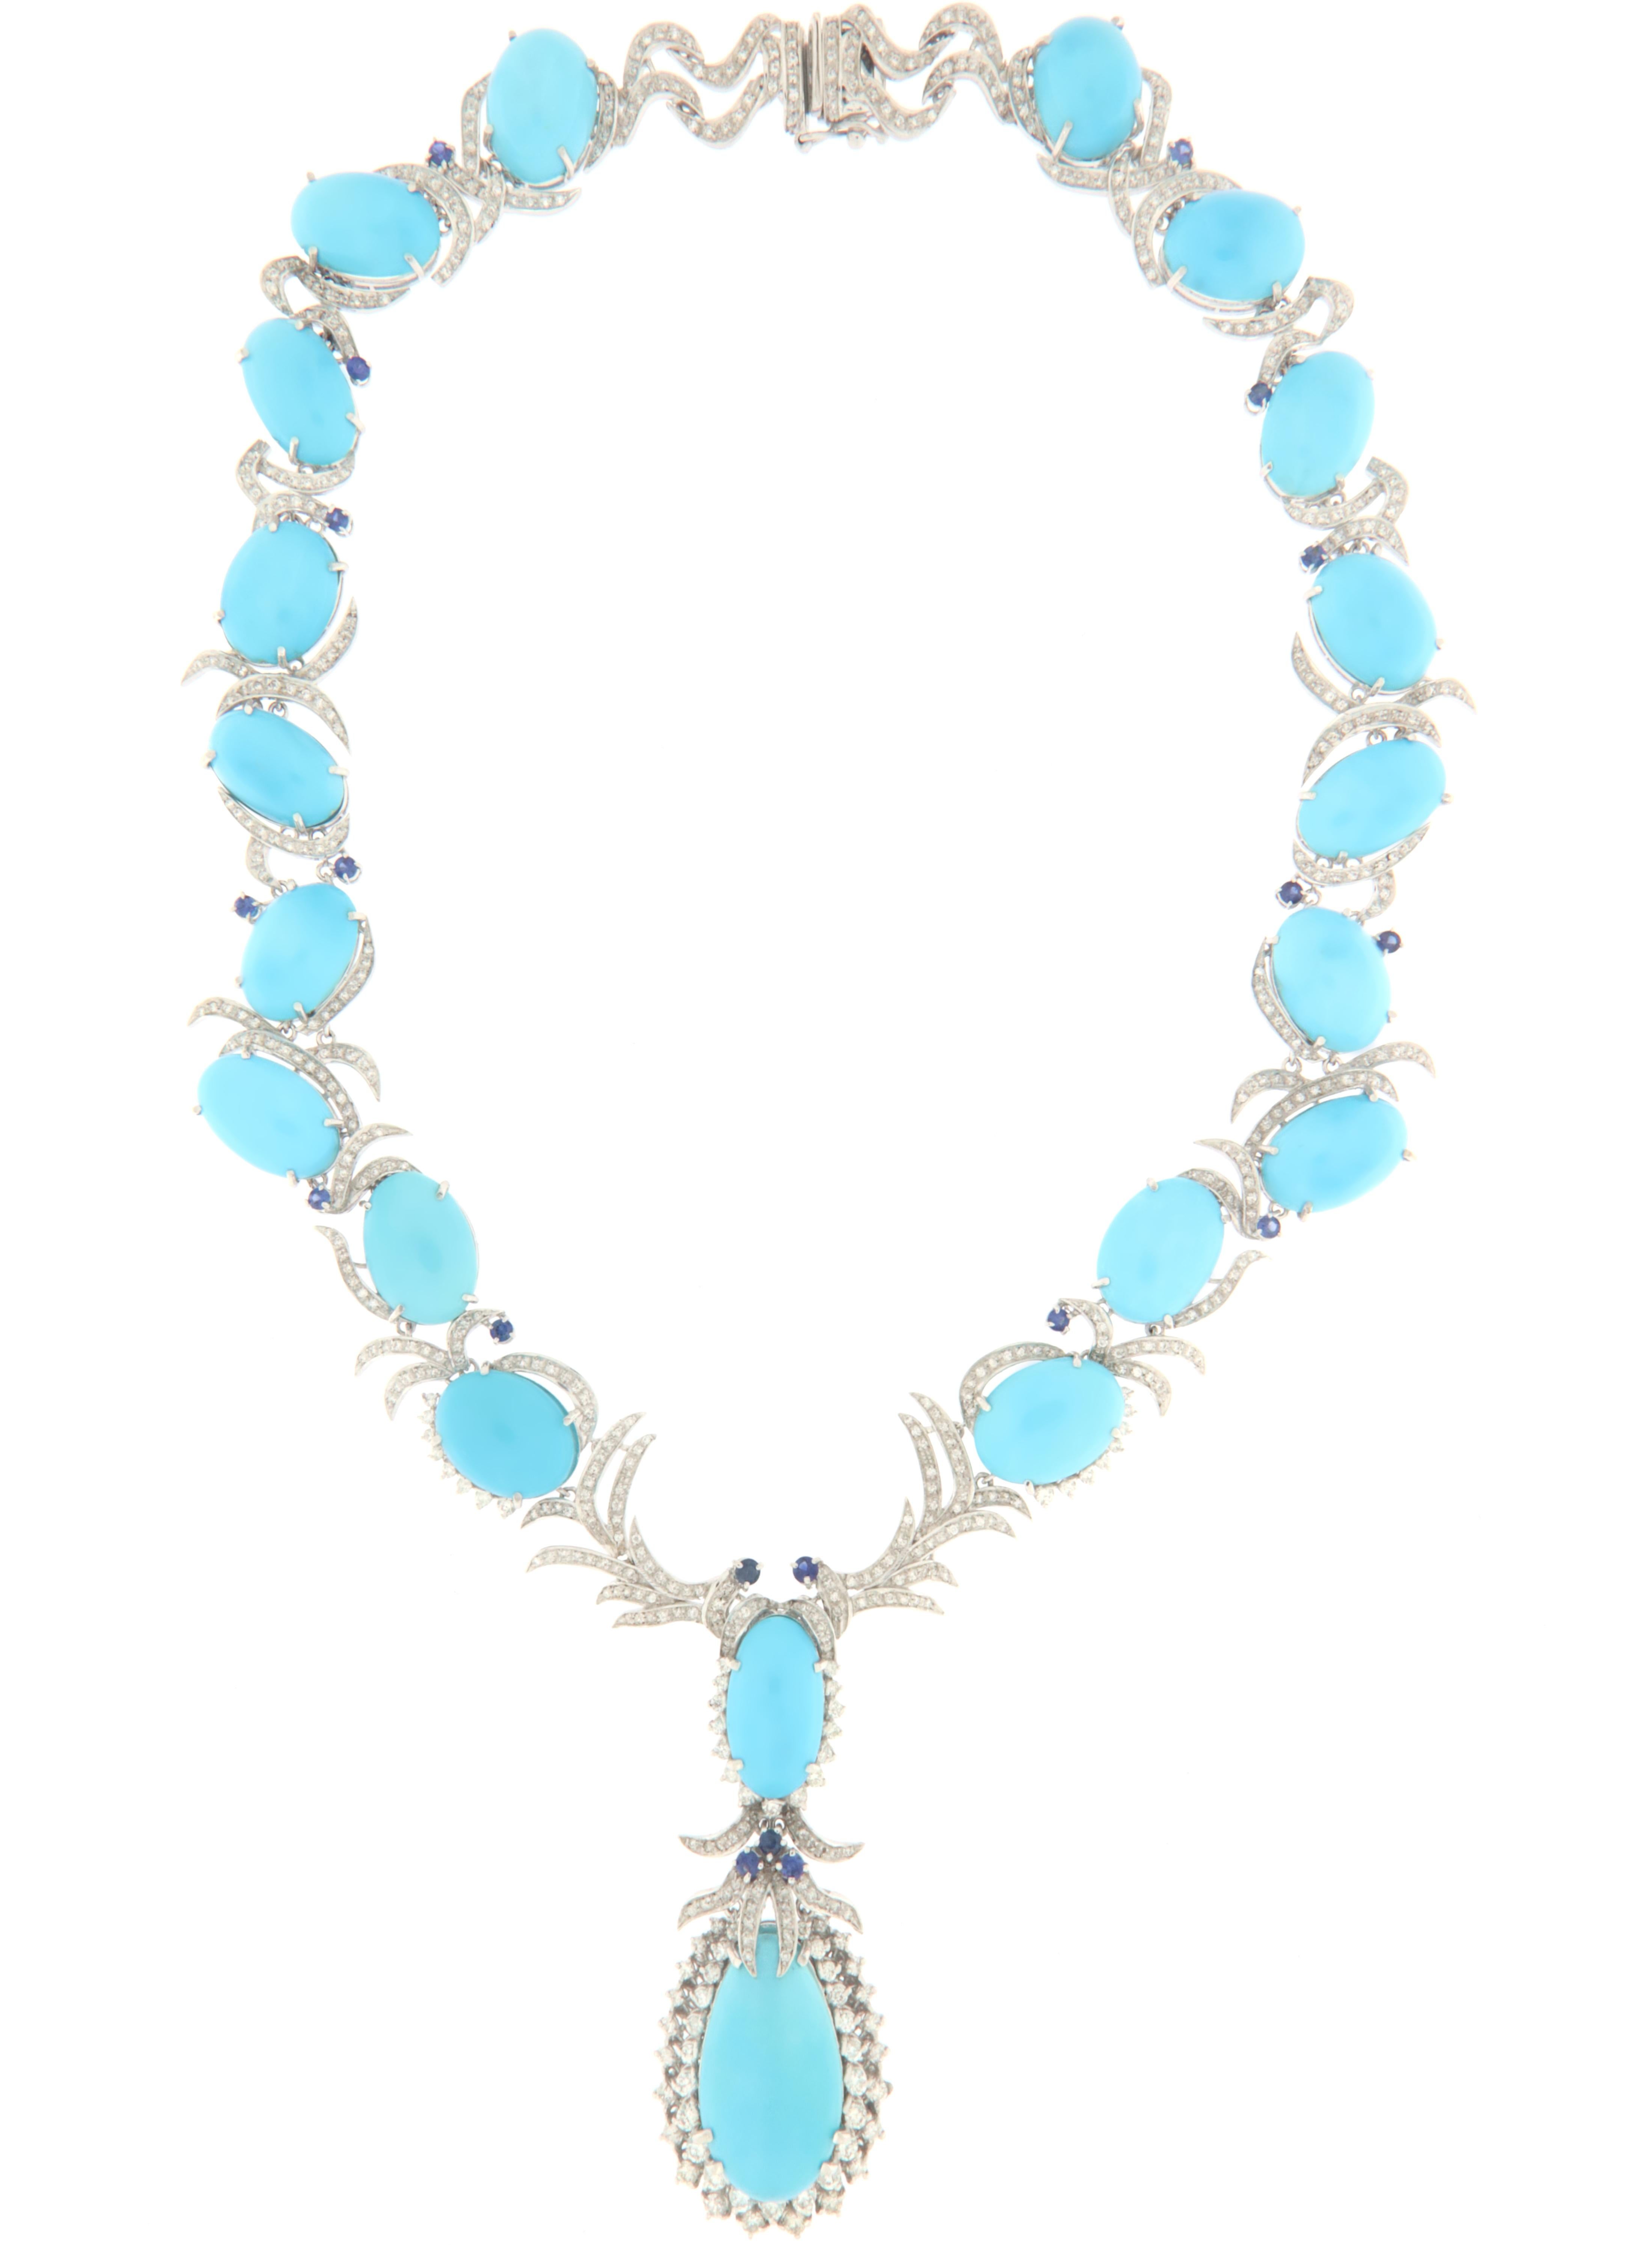 Brilliant Cut Diamonds Sapphires Turquoise White Gold 18 Karat Parure Necklace And Earrings